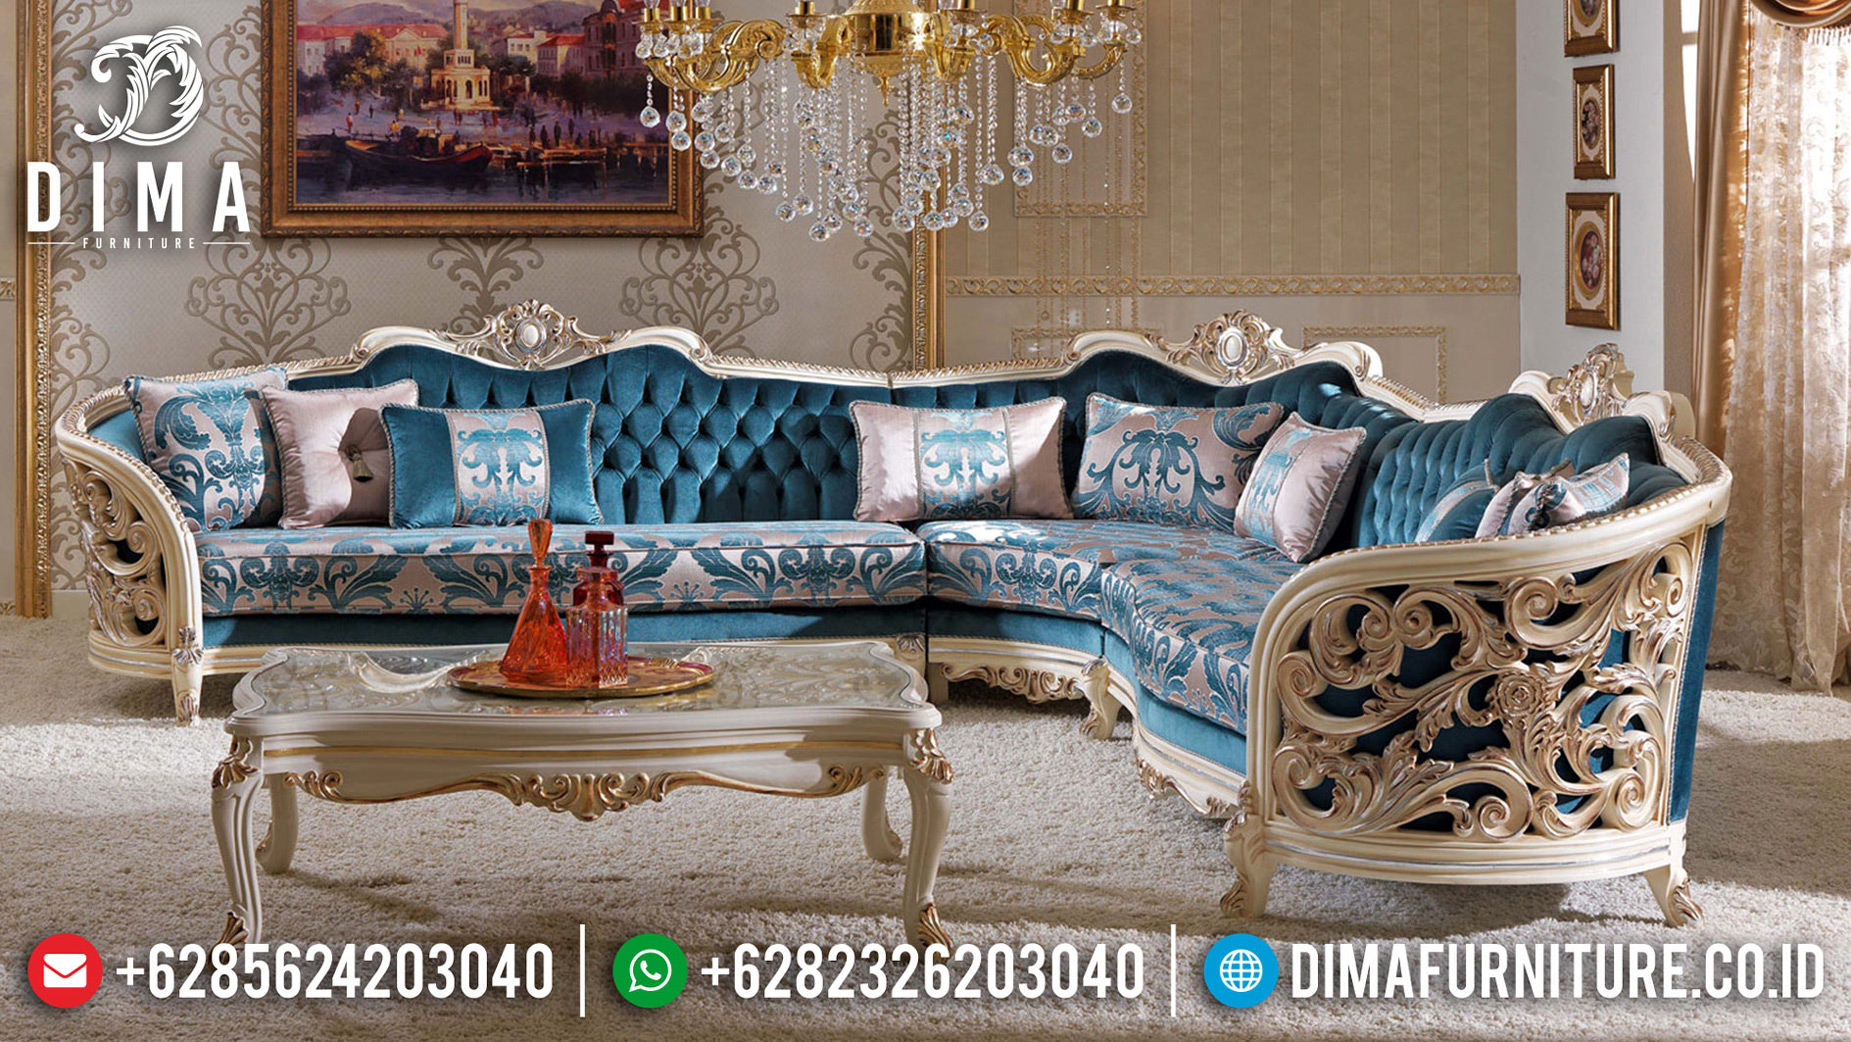 Harga Sofa Tamu Ukiran Klasik Mewah Luxury Type Great Wood Furniture Jepara BT-0690